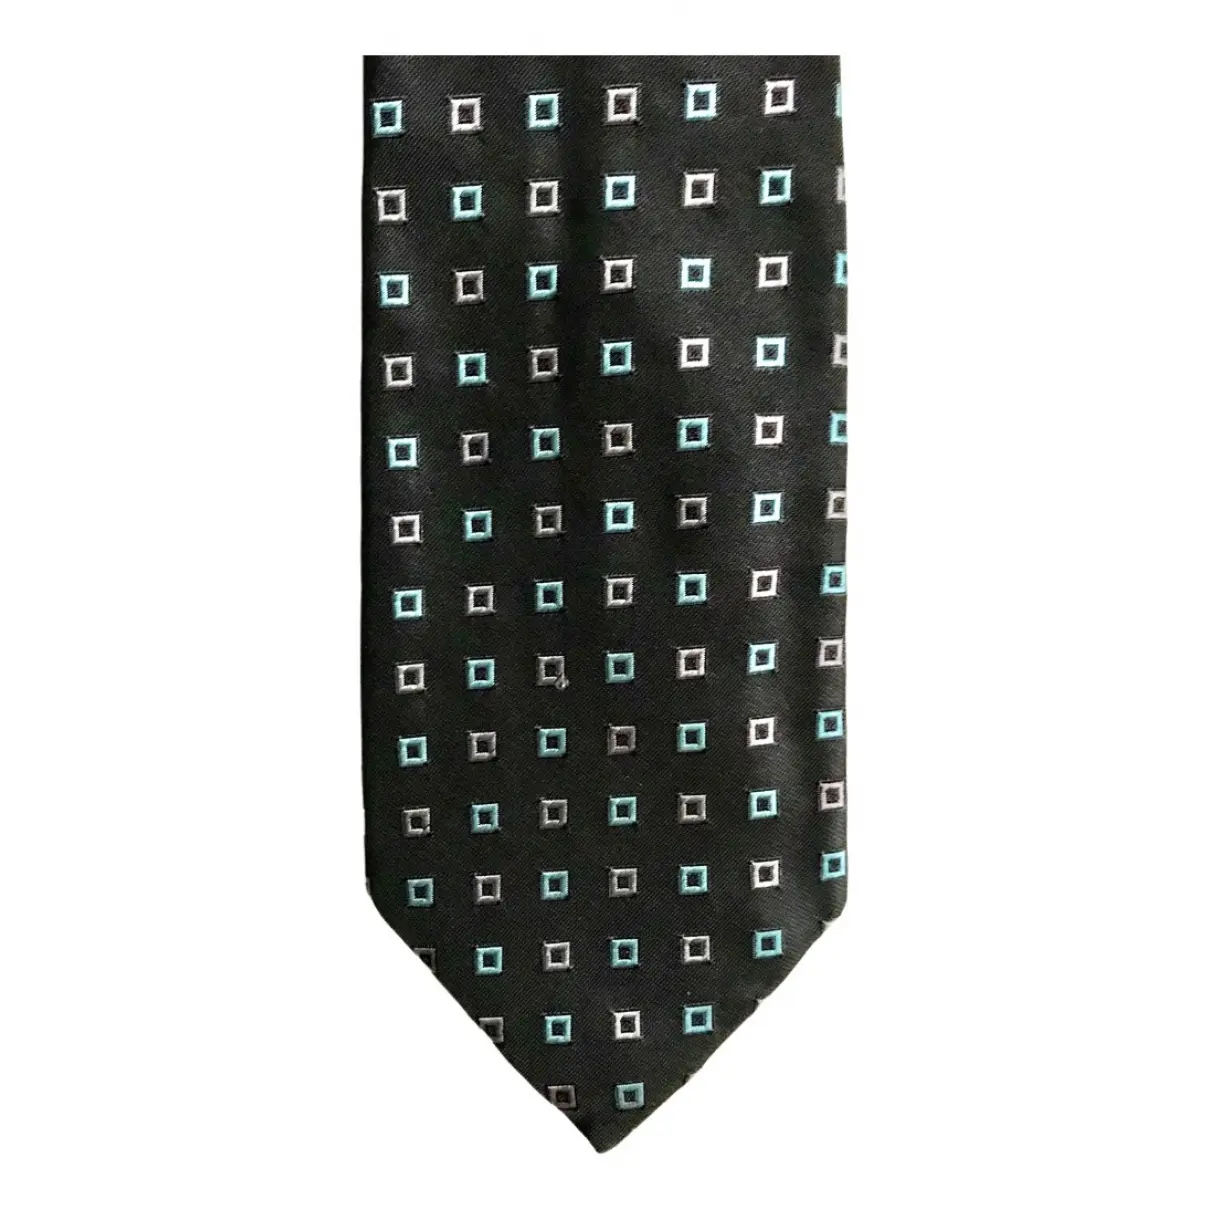 Buy Tiffany & Co Silk tie online